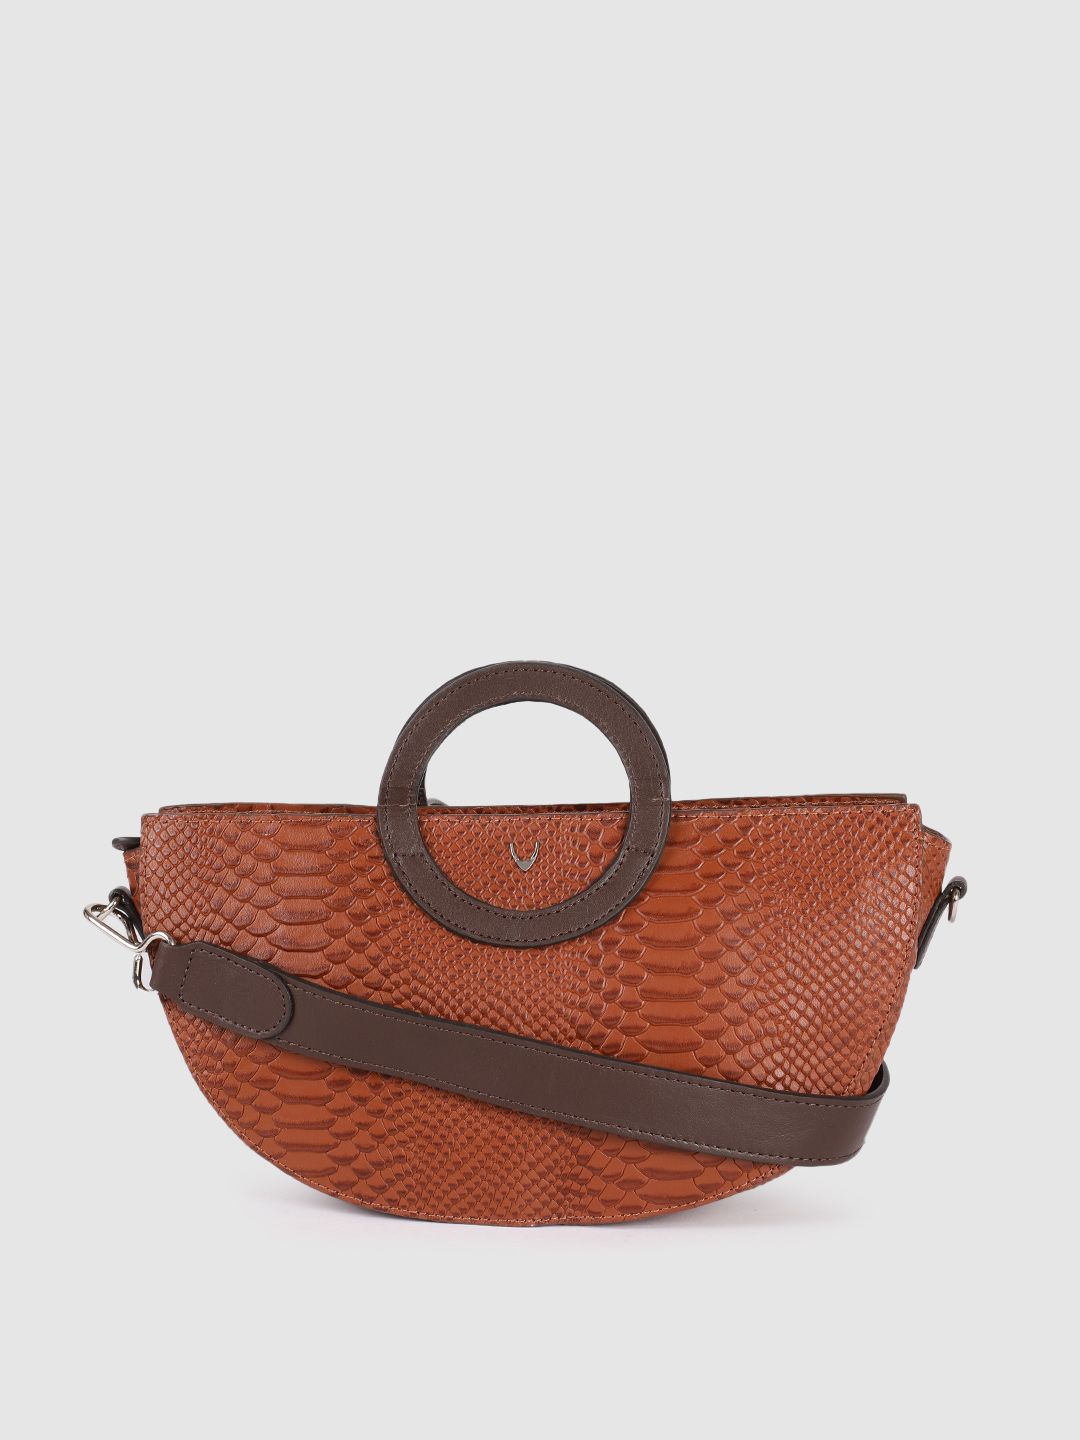 Hidesign Tan Brown Textured Leather Half Moon Handheld Bag Price in India